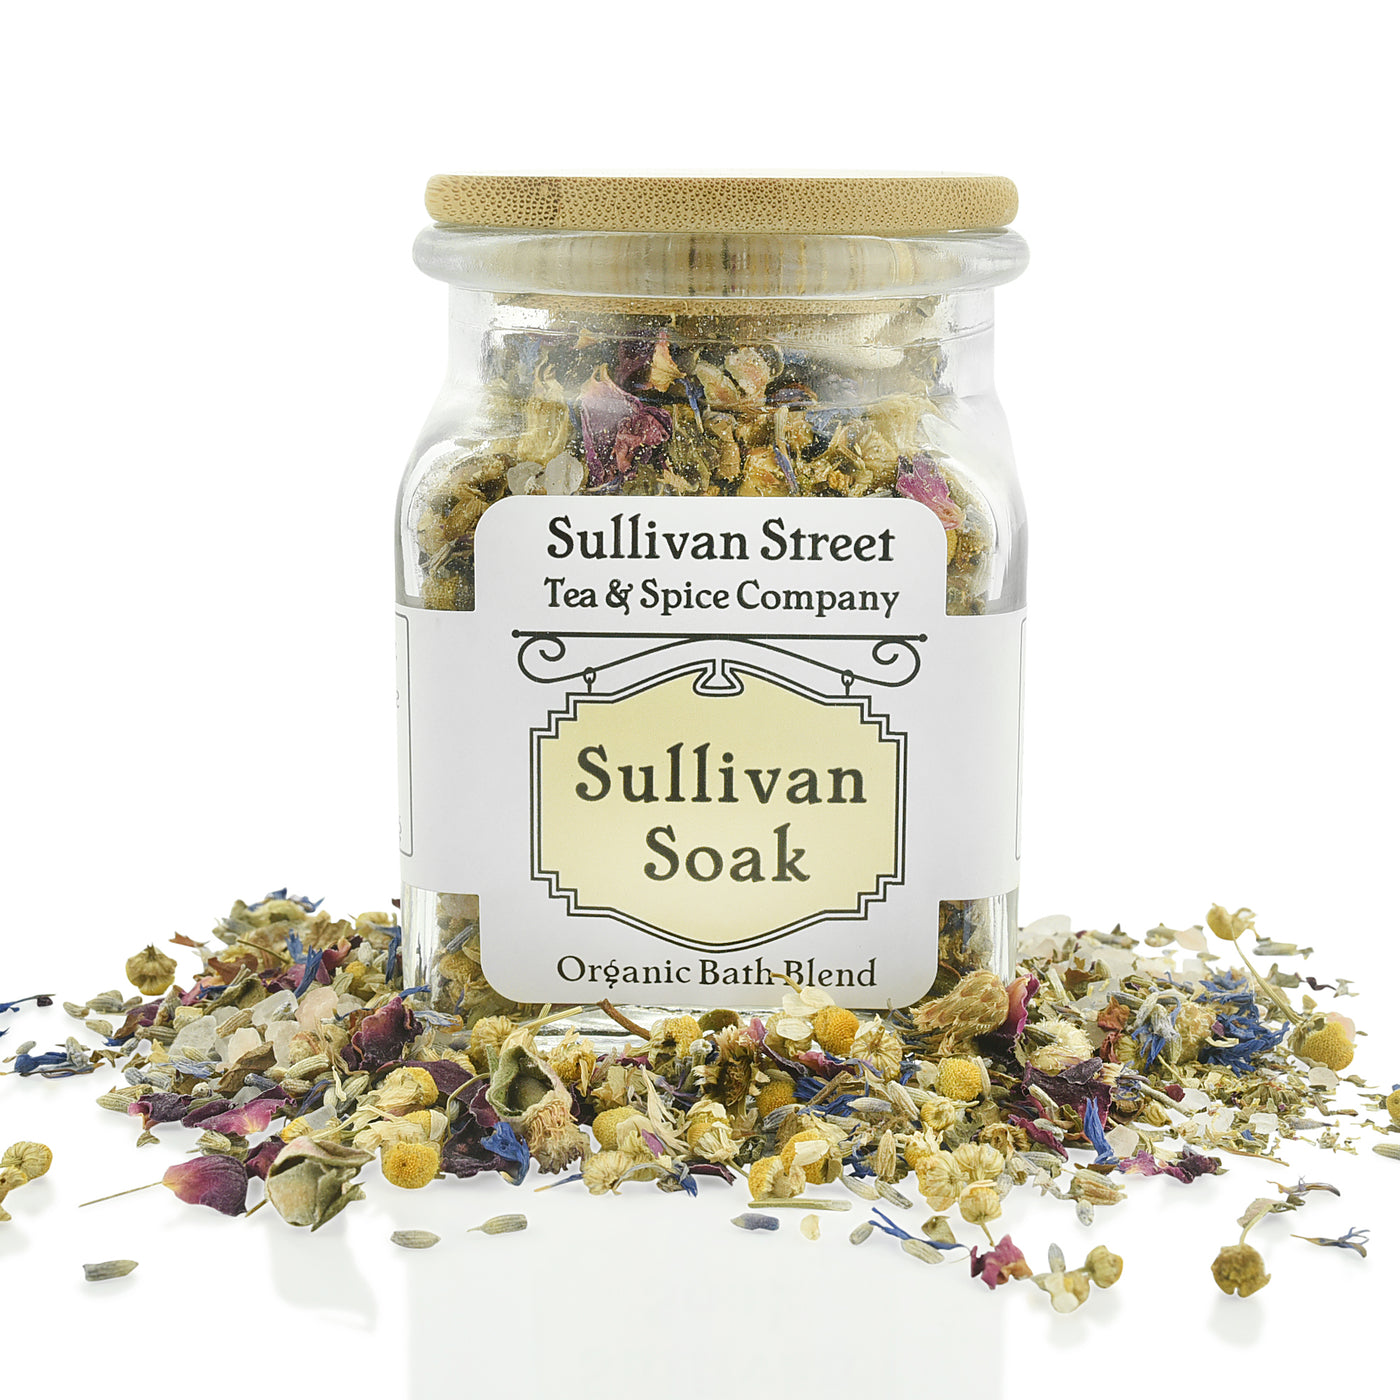 Sullivan Soak Bath Set 🛁 - Sullivan Street Tea & Spice Company